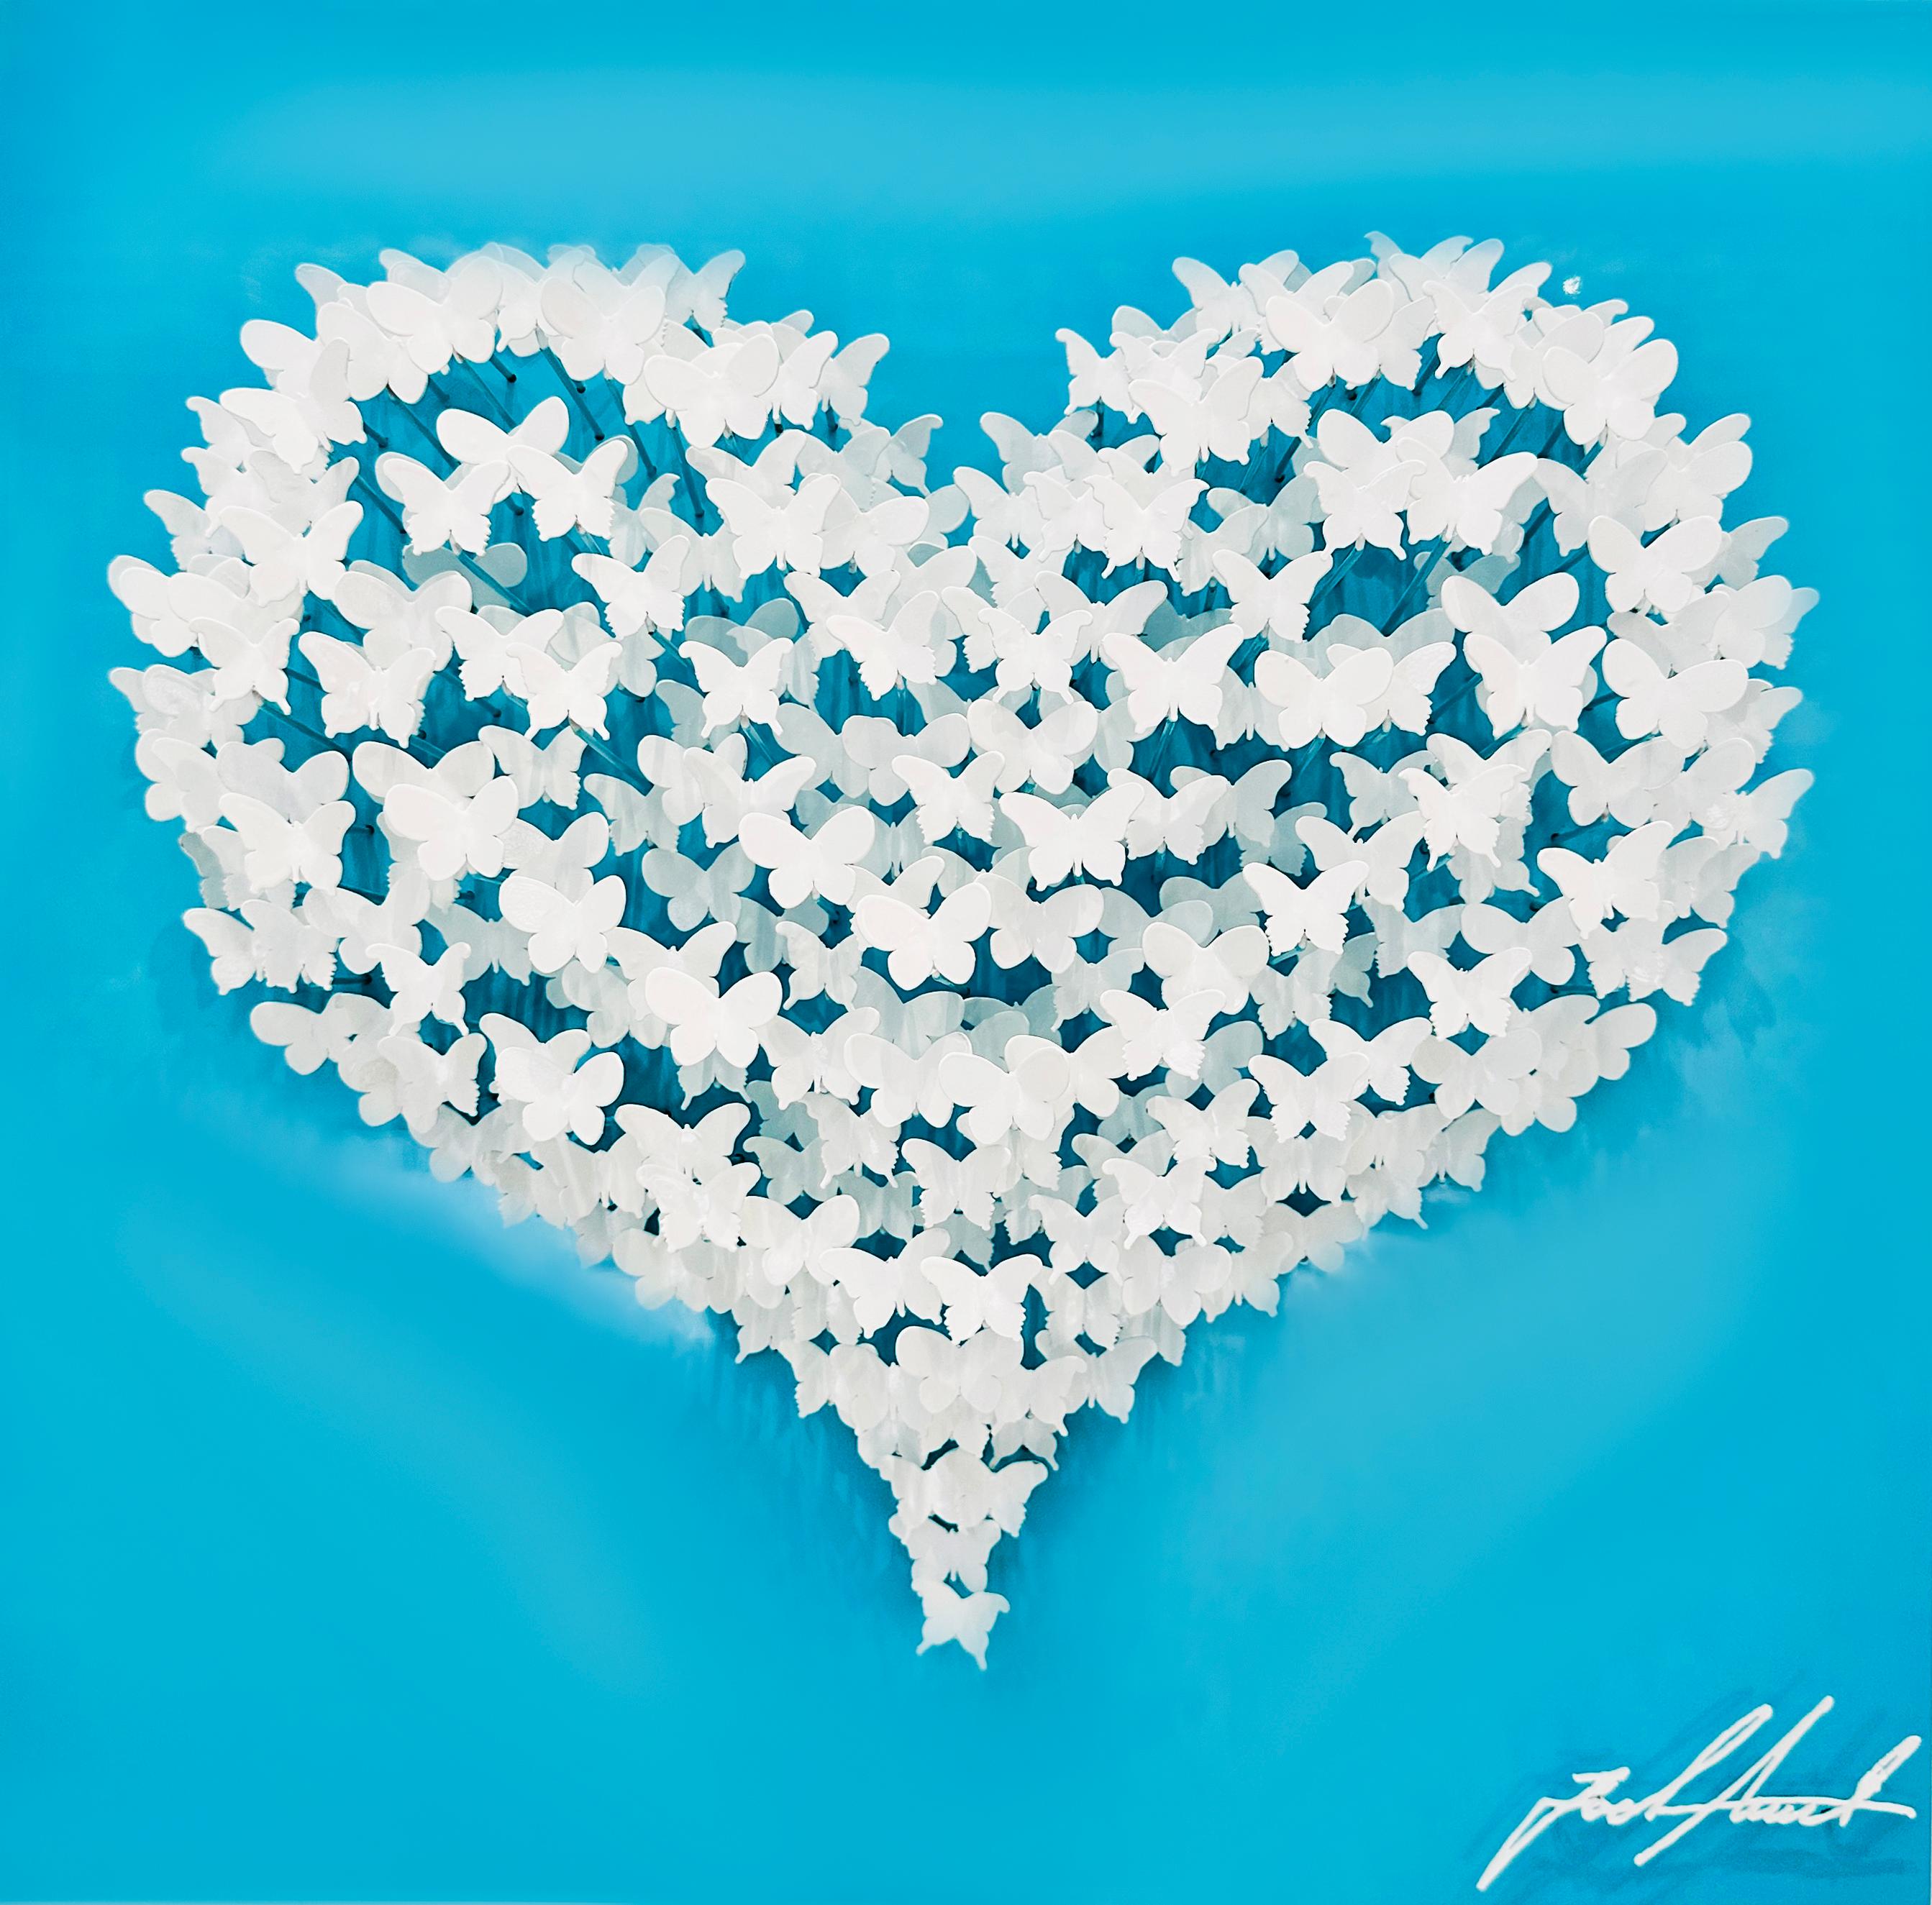 Flying Love, Mixed Media Metal Wall Sculpture - Mixed Media Art by Joel Amit